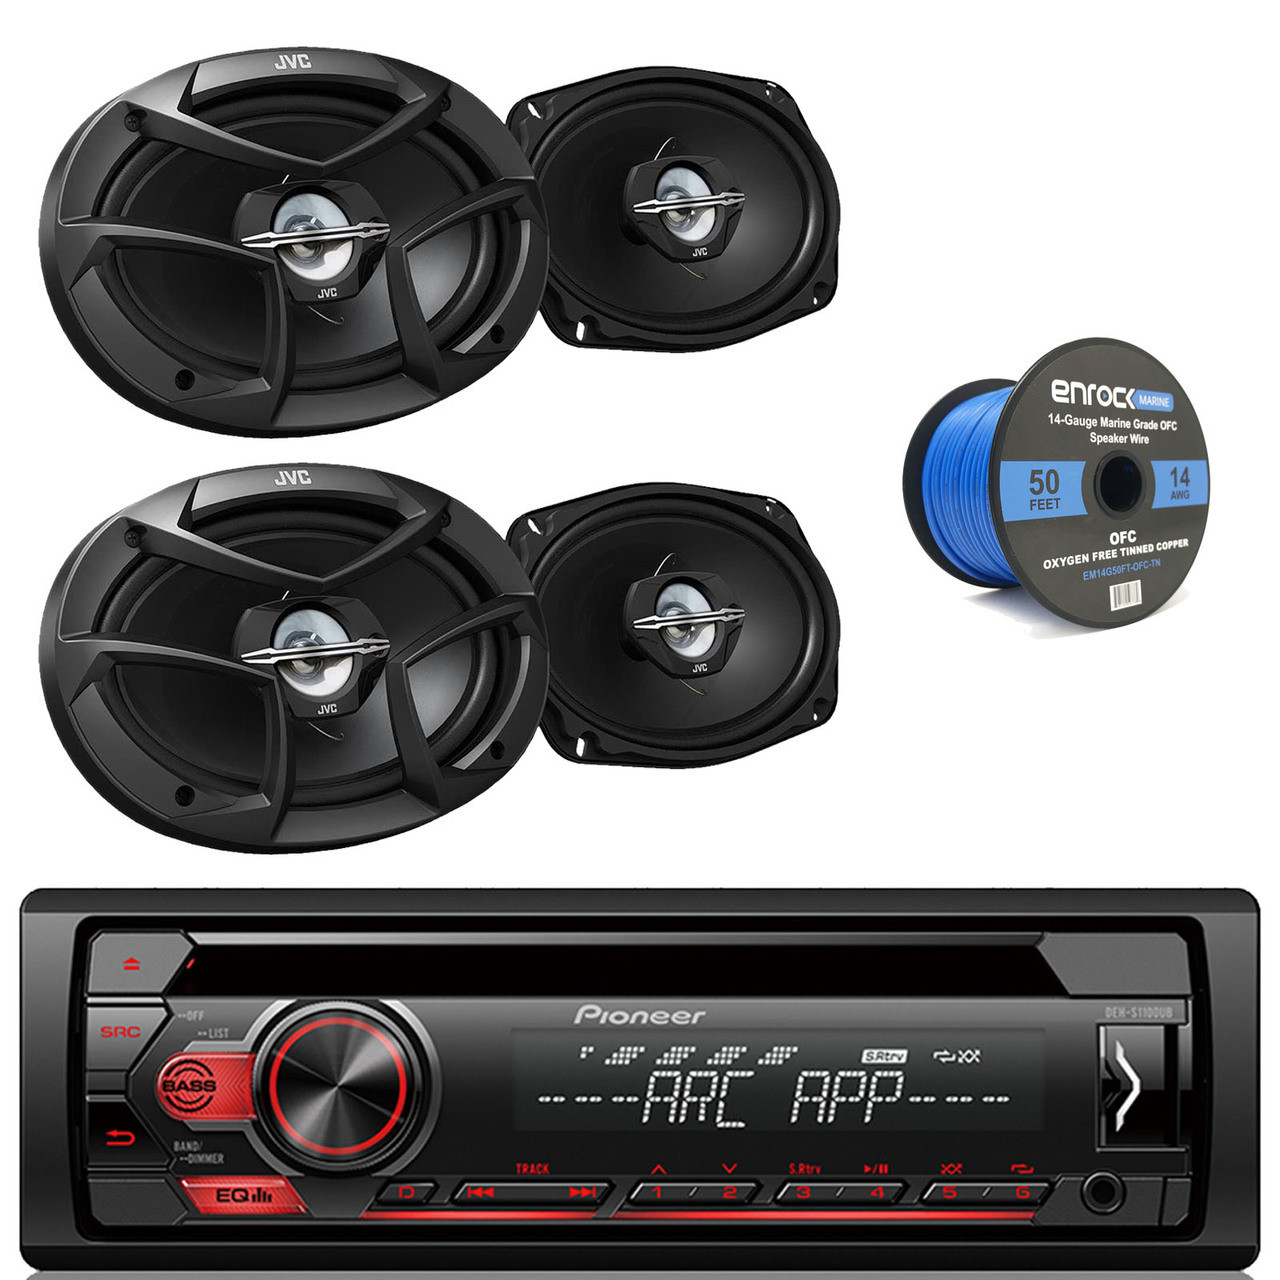 Estéreo Pioneer DEH150MP In-Dash CD/MP3/WMA, Nuevo, Negro